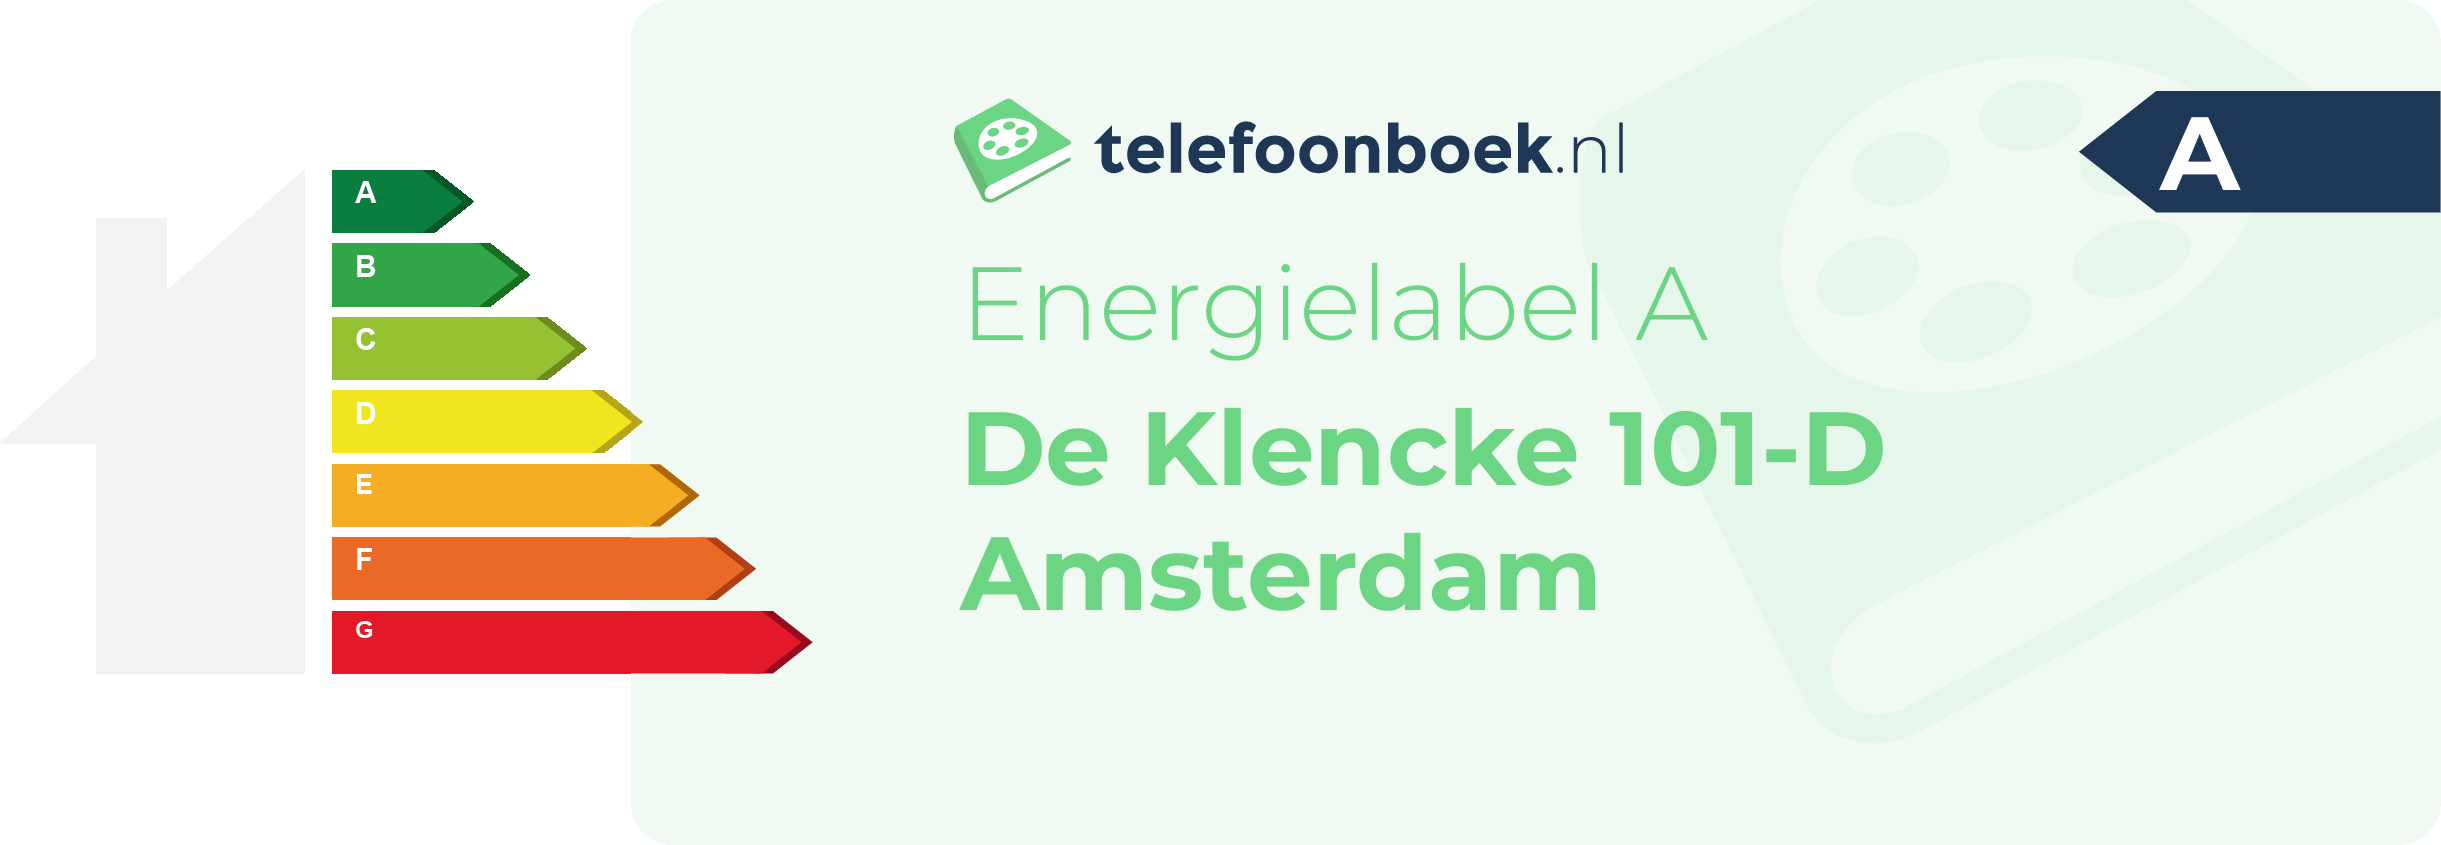 Energielabel De Klencke 101-D Amsterdam